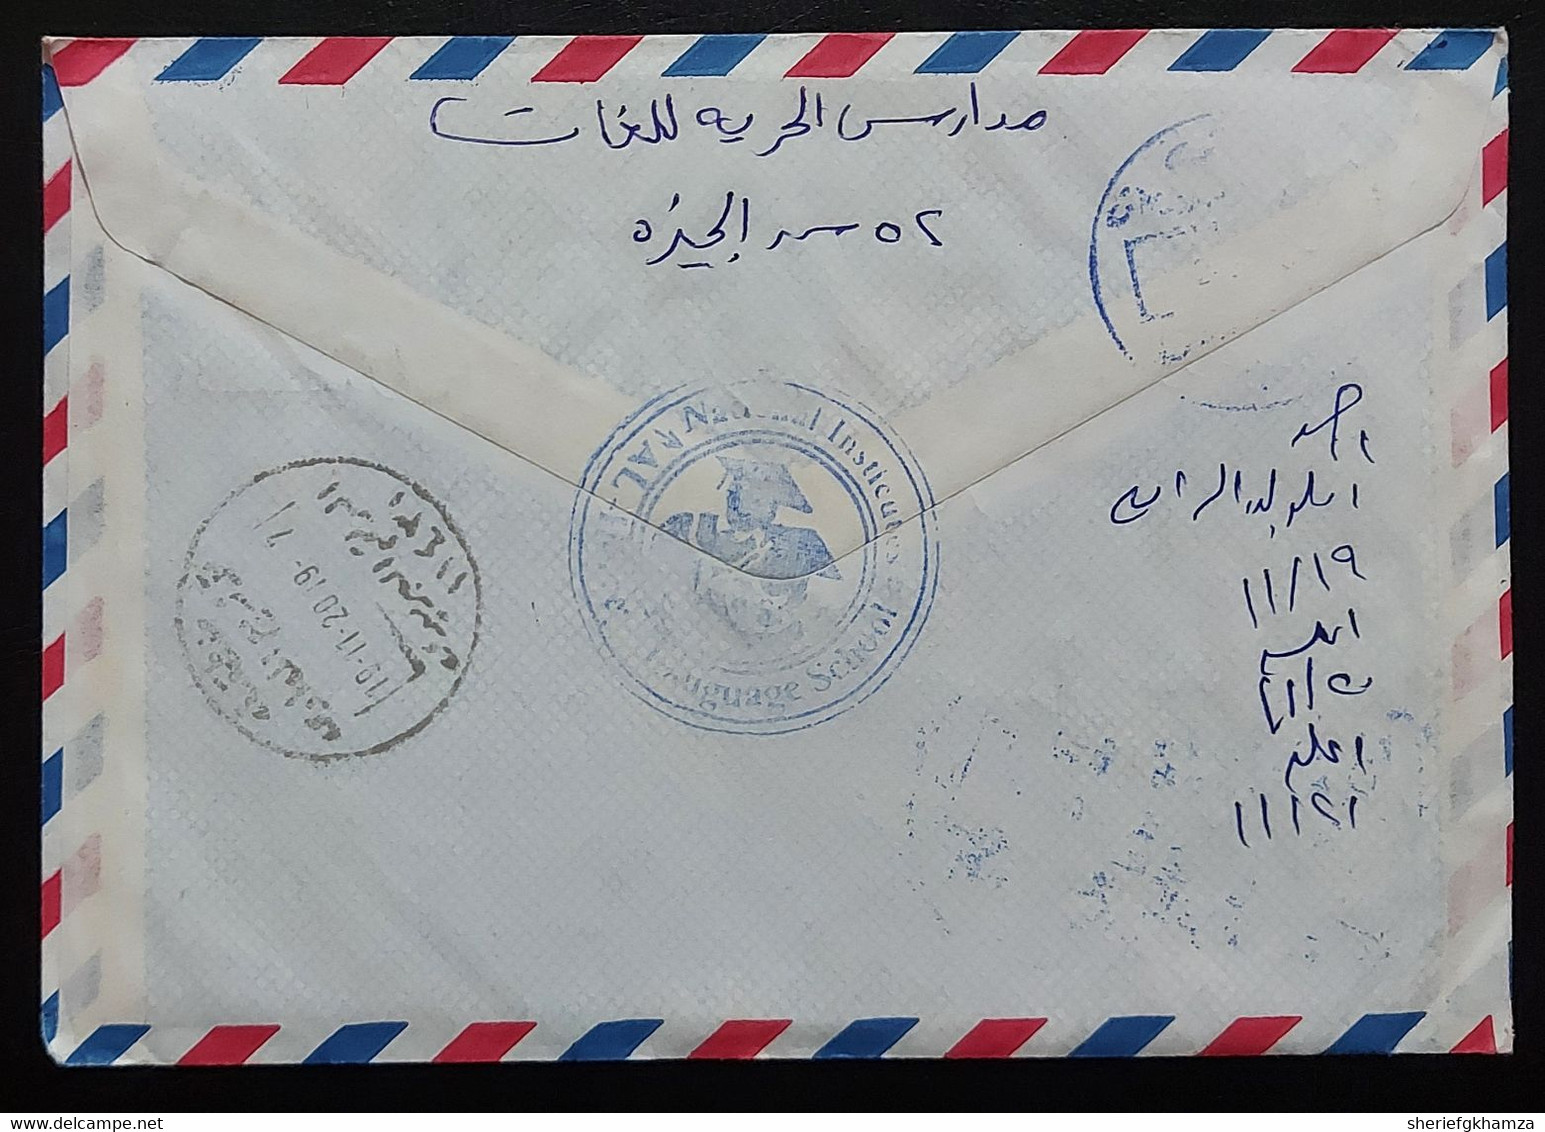 Egypt 2011 Cover With UNIVERSAL POSTAL UNION Stamp And The King Pharaoh EKHNATUN Stamp - Storia Postale